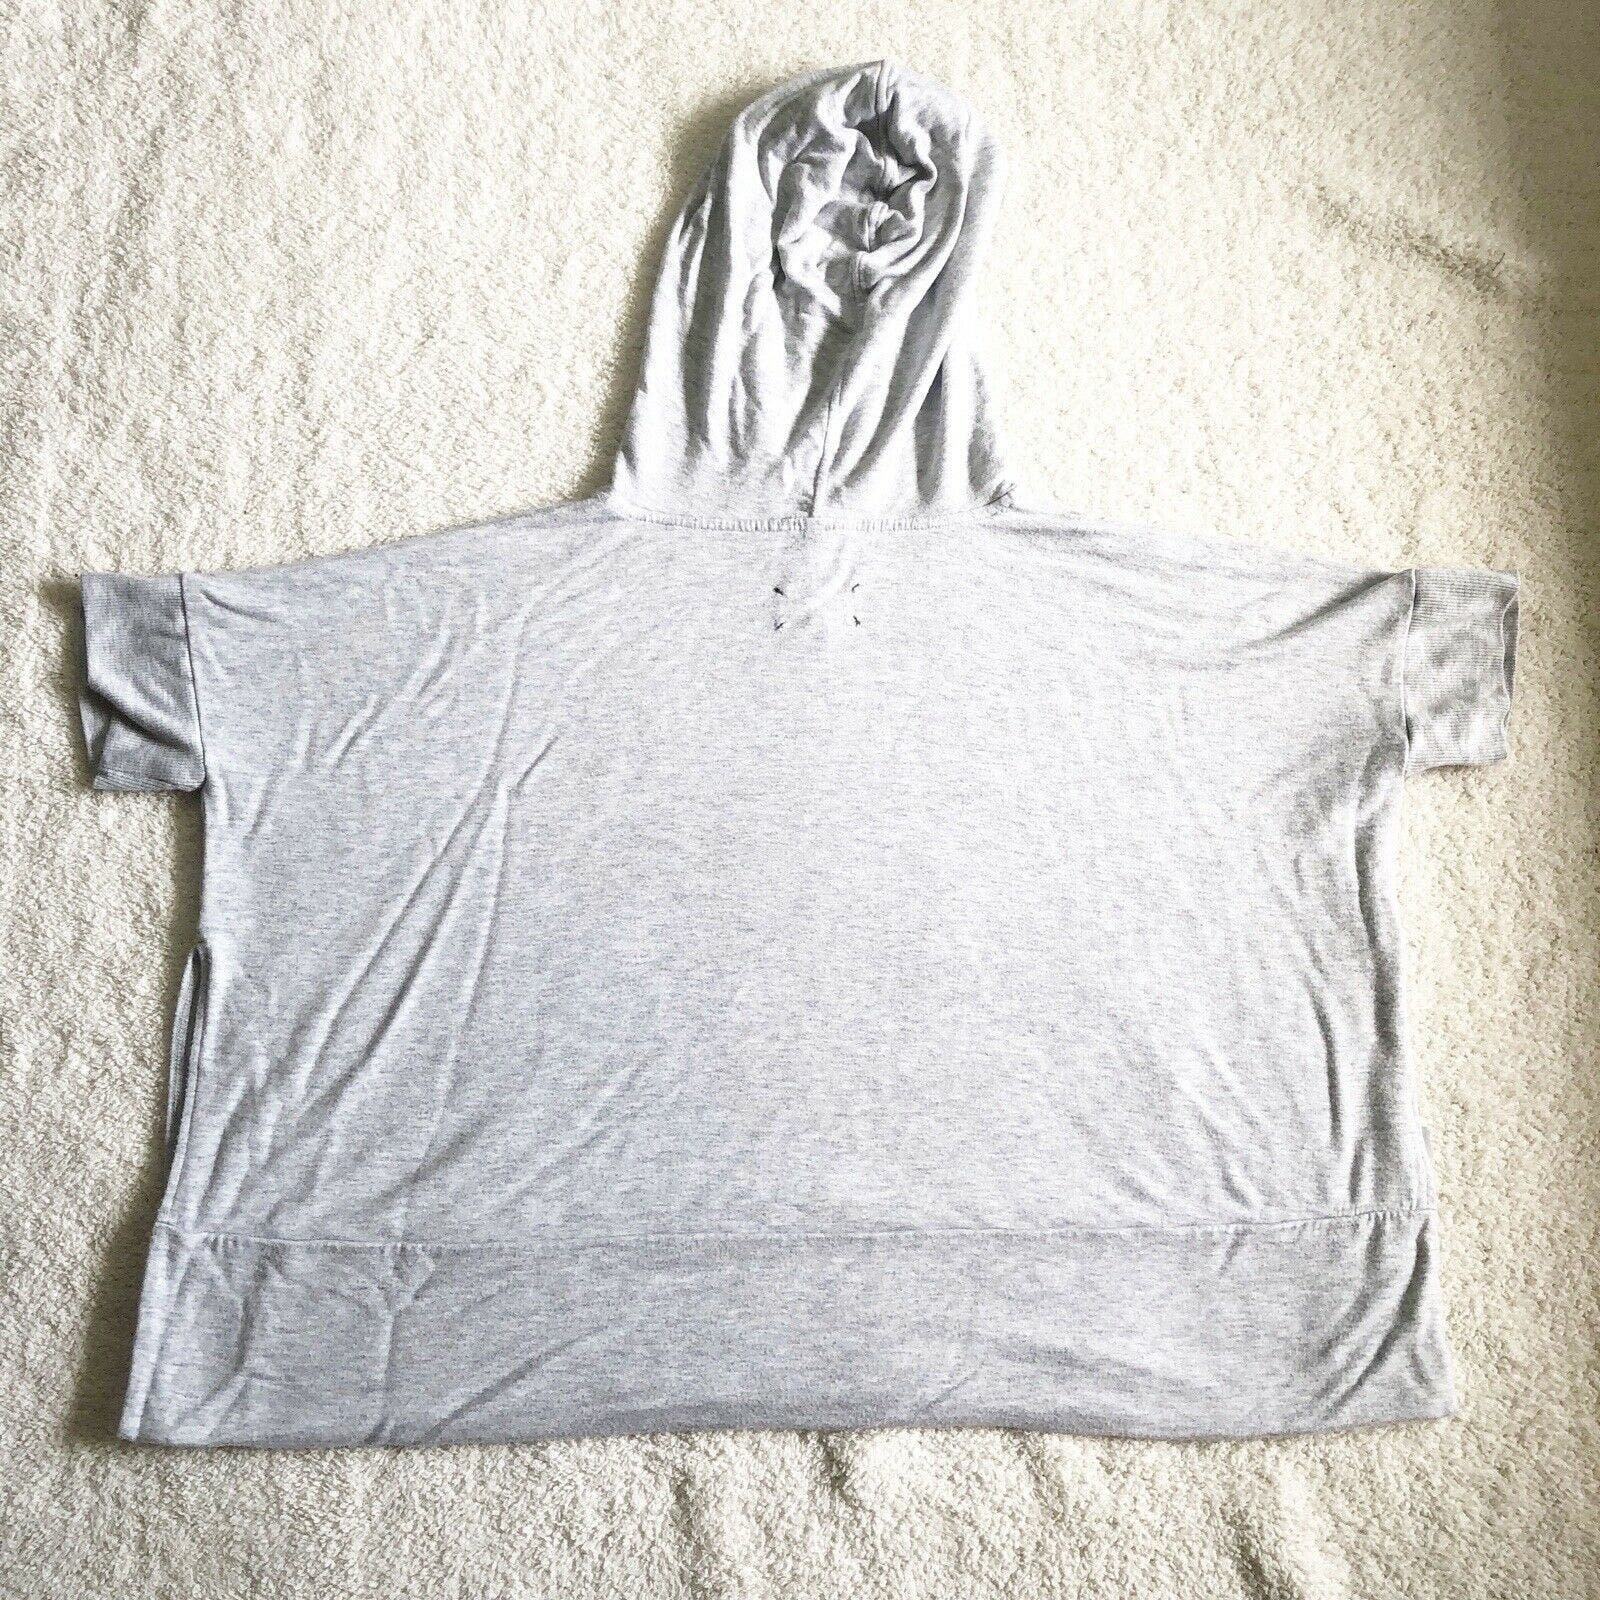 Cheap Lou & Grey Signature Soft XS Oversized Gray Hooded Short Sleeve Poncho Top hYihiPEnb New Style